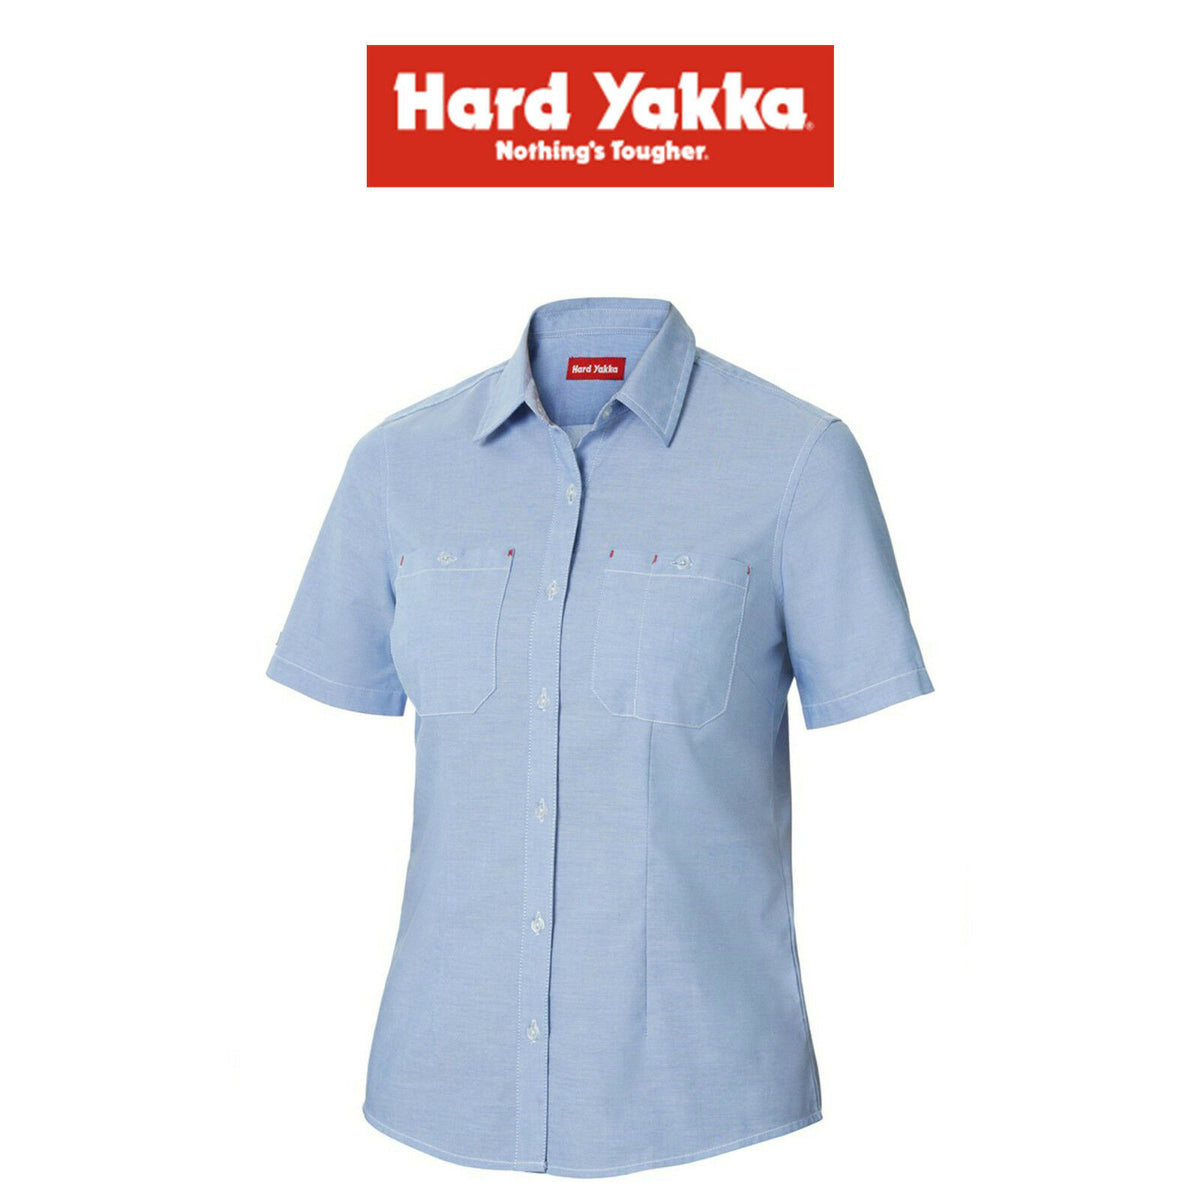 Womens Hard Yakka Foundations Short Sleeve Blue Chambray Shirt Corp Work Y08041